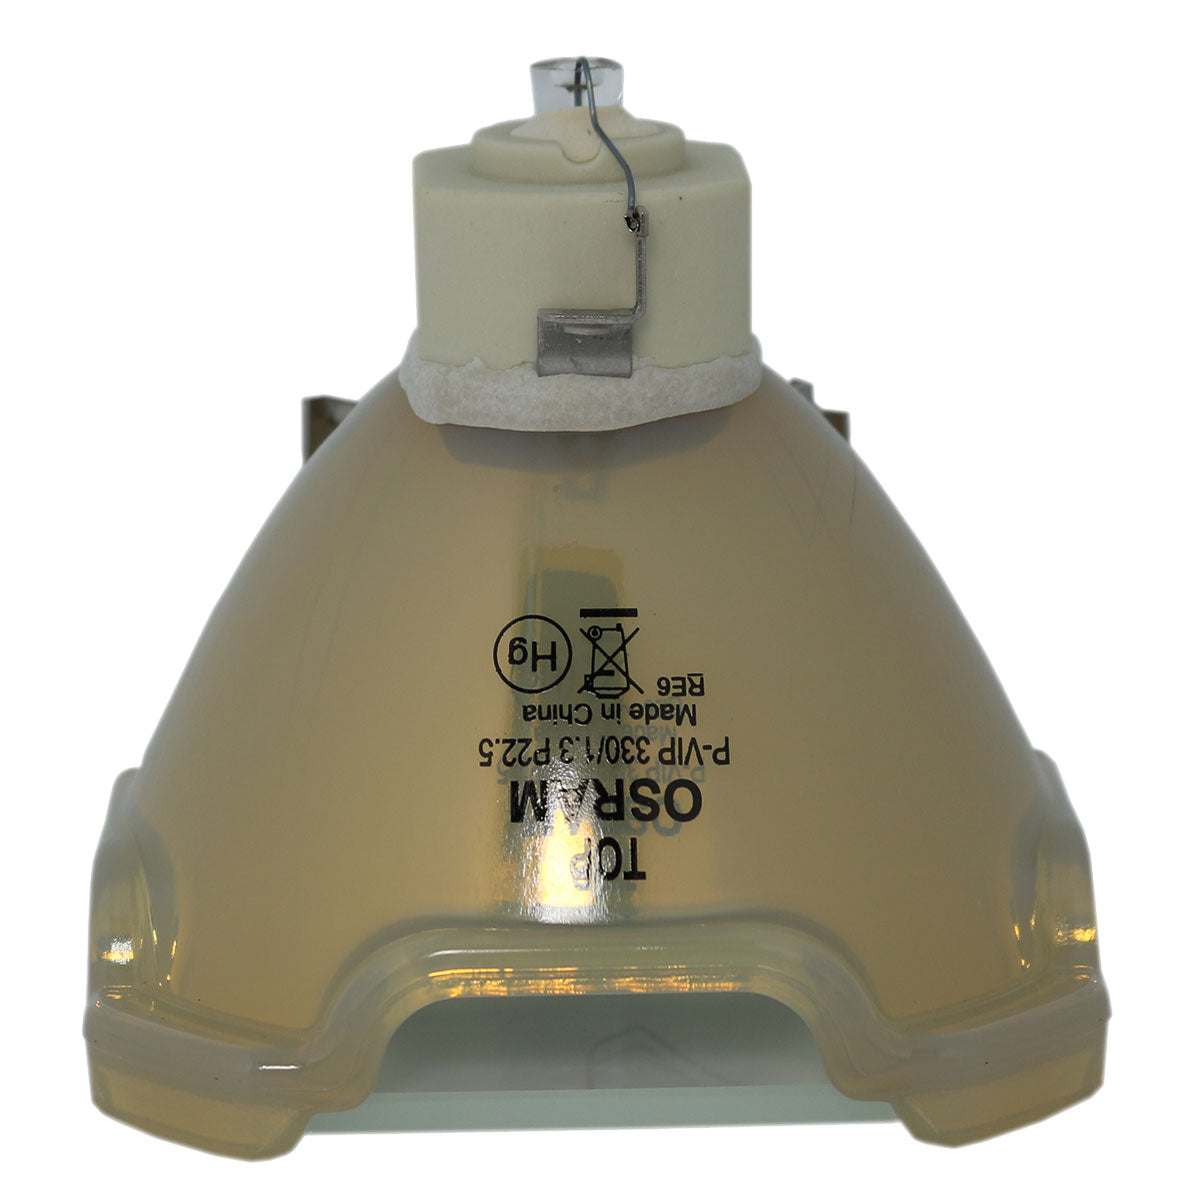 Eiki POA-LMP109 Osram Projector Bare Lamp